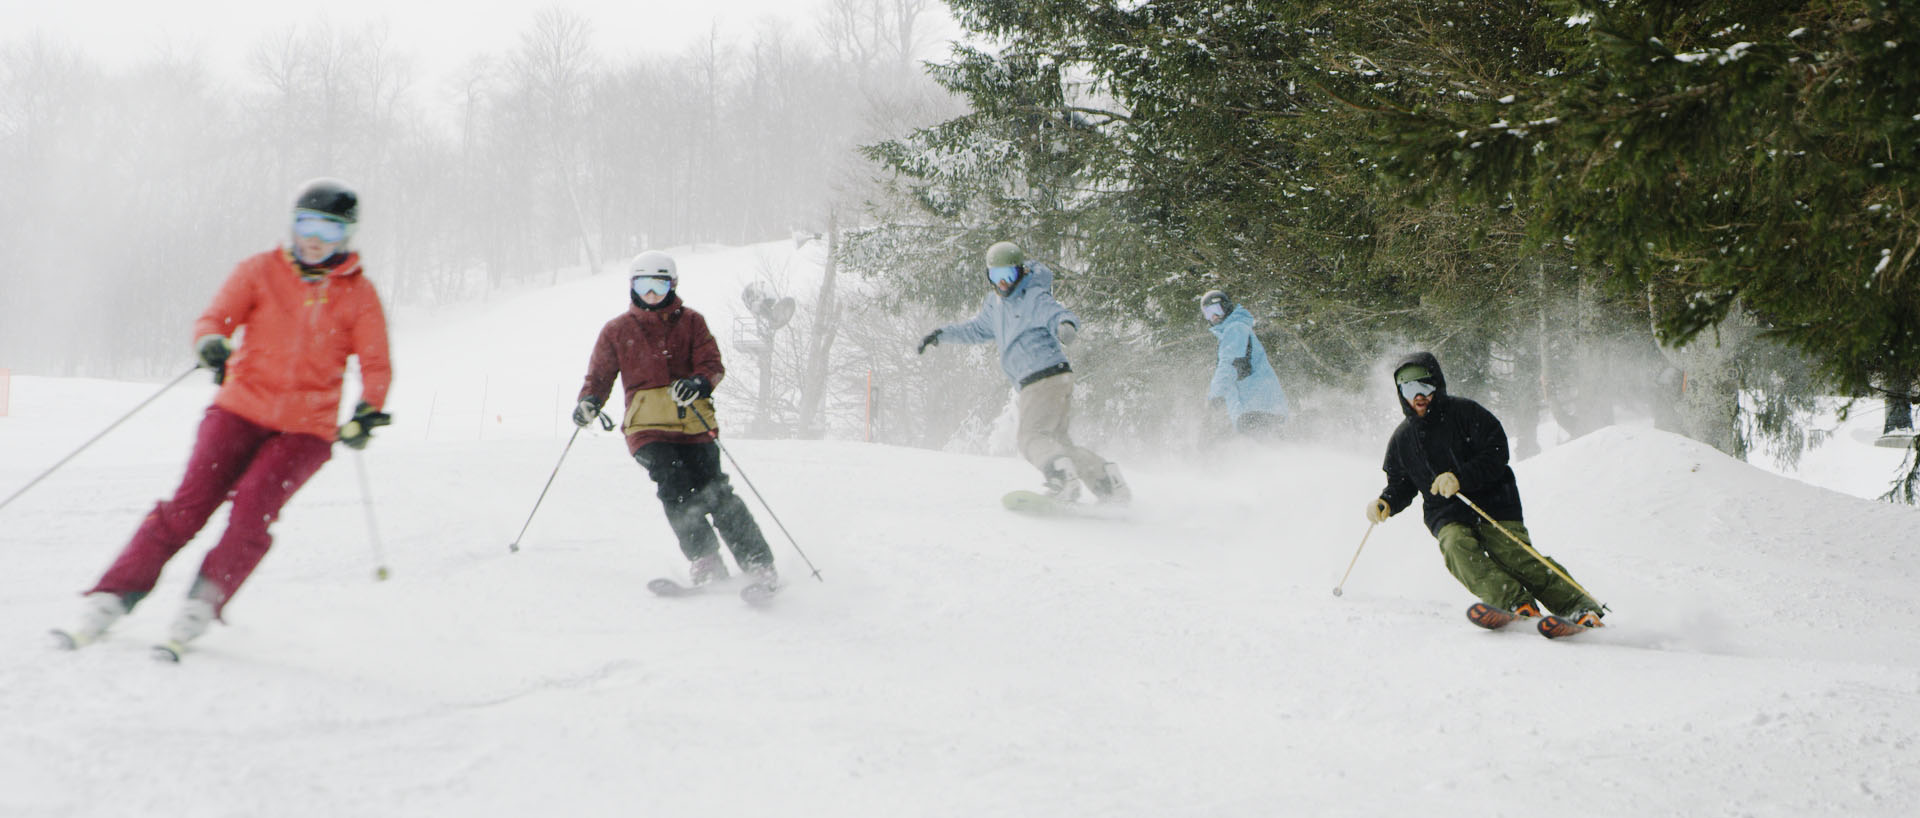 nowsay-film-production-north-carolina-beach-mountain-group-riders-ski-snowboard